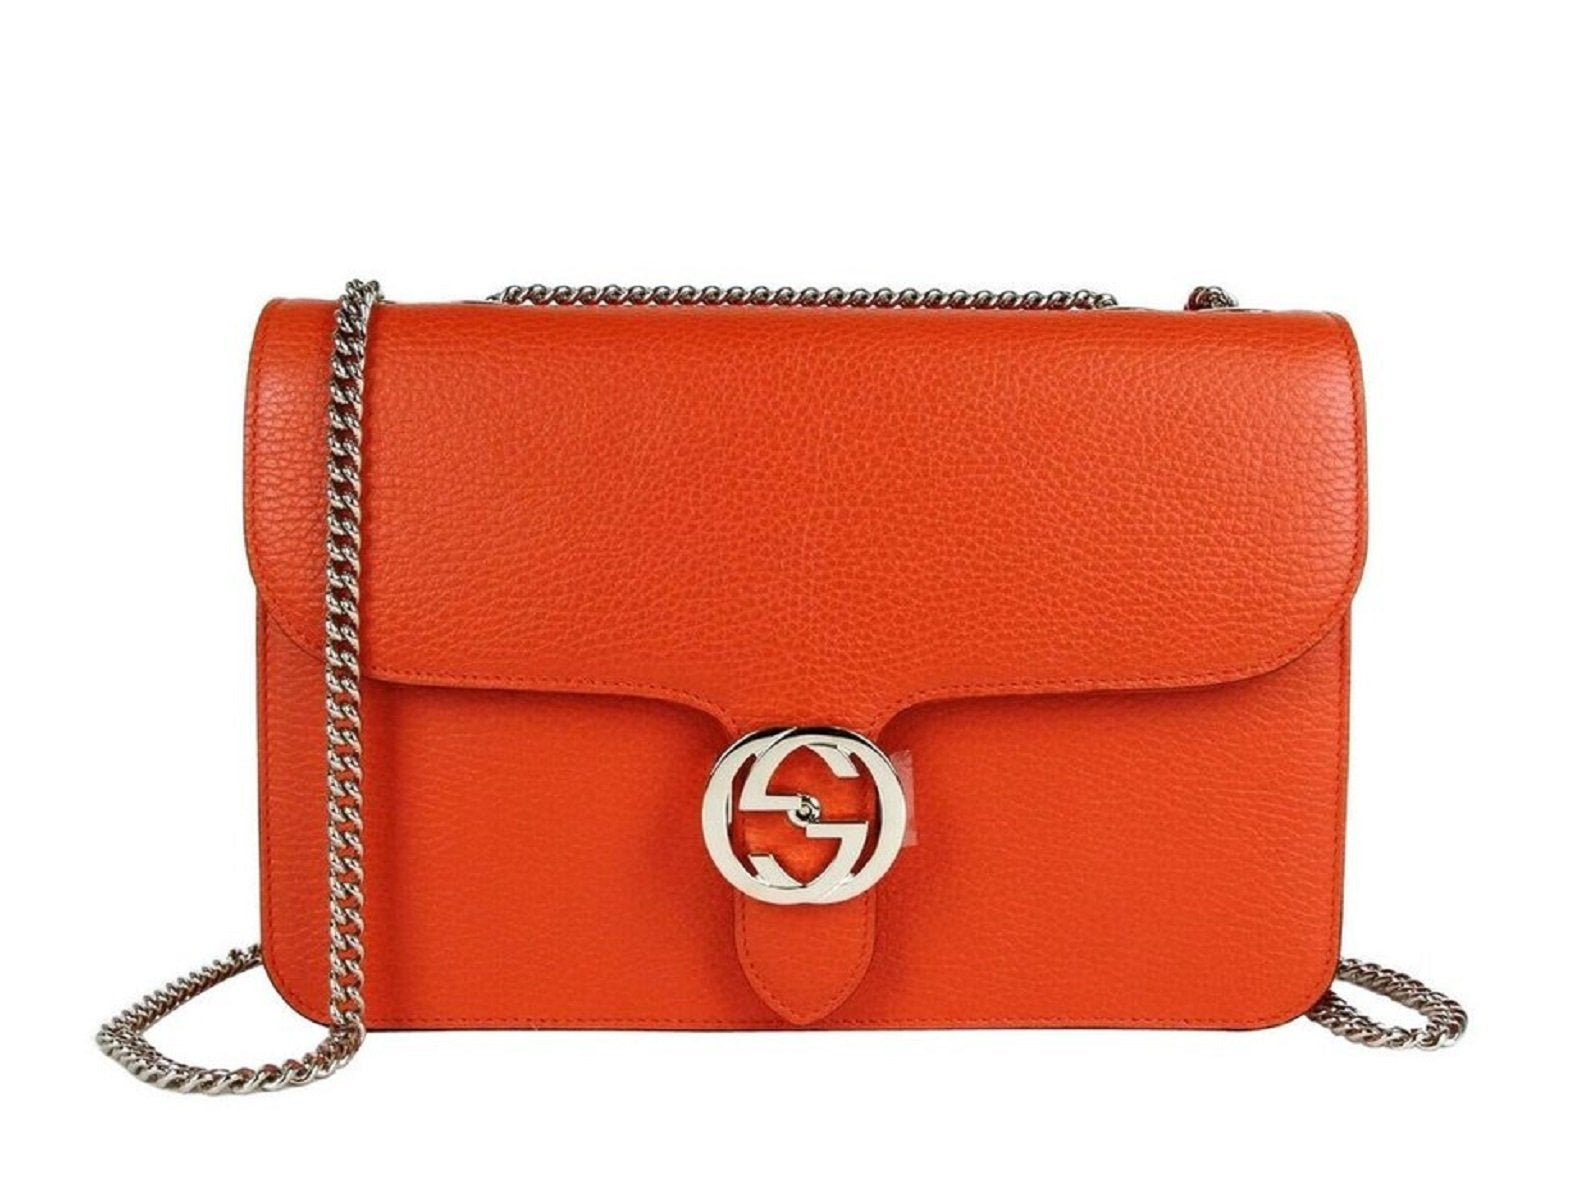 Gucci Marmont Orange Icon GG Interlocking Medium Cross Body Handbag 510303 | eBay